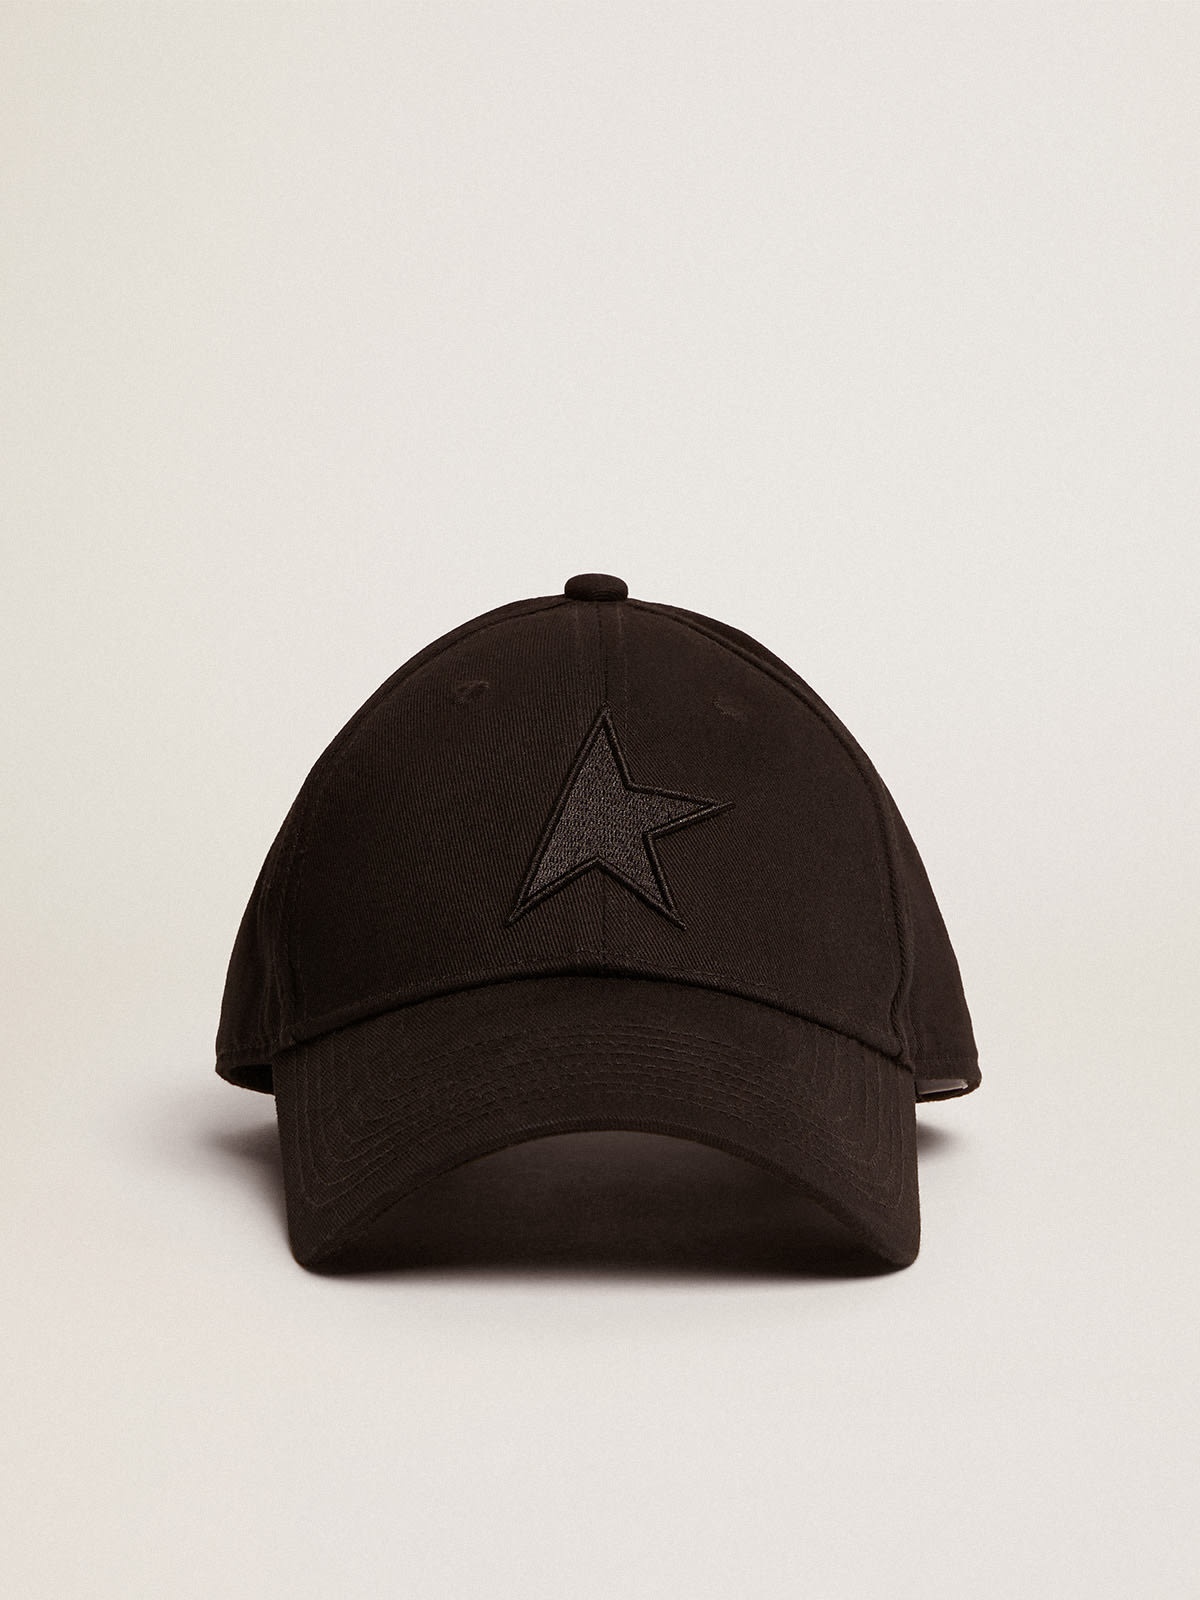 Black baseball cap with star - 1